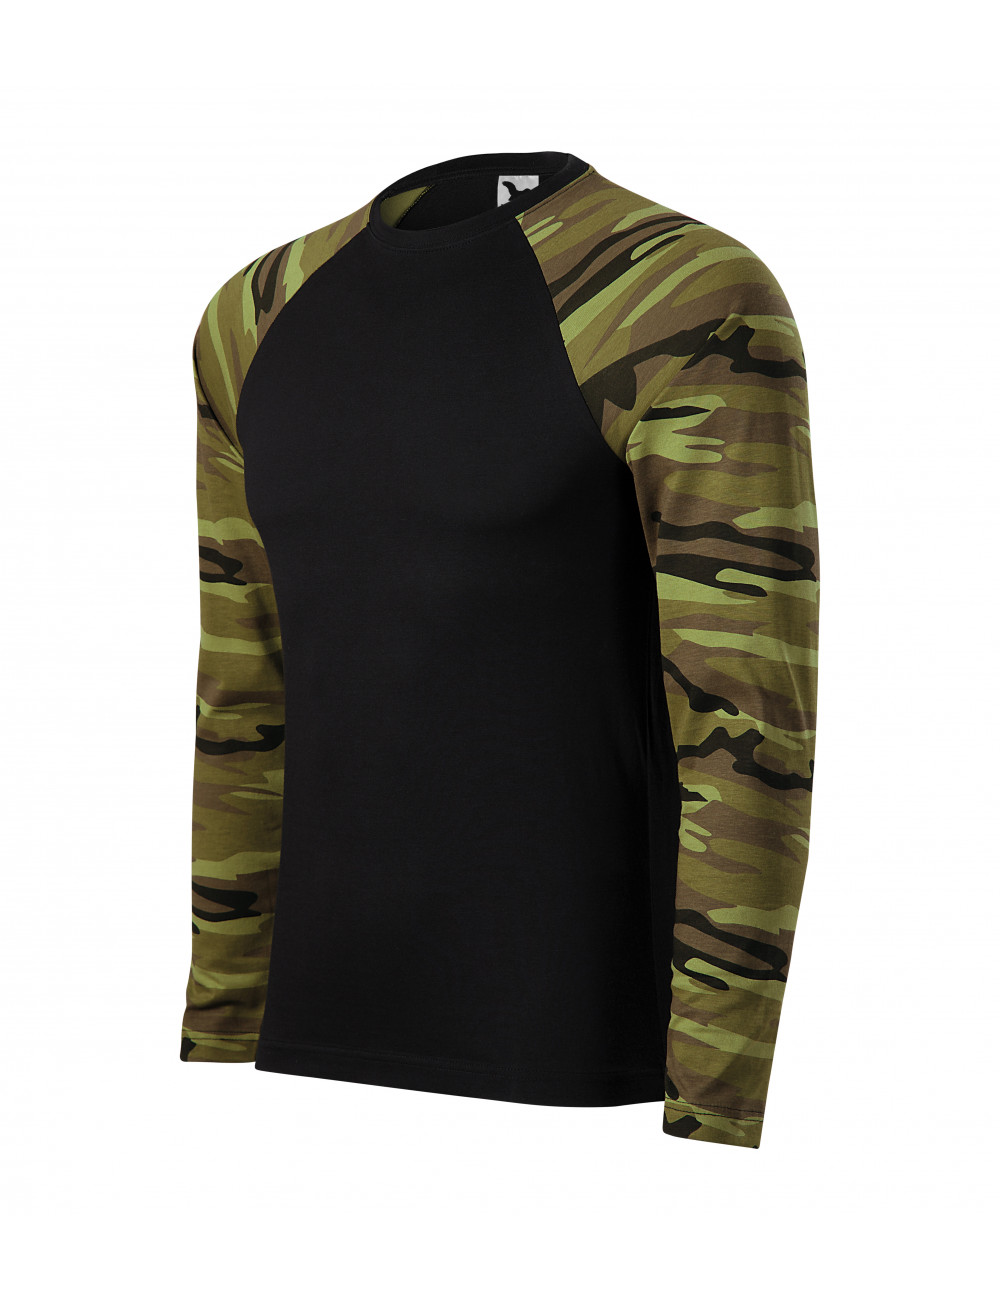 Unisex t-shirt camouflage ls 166 camouflage green Adler Malfini